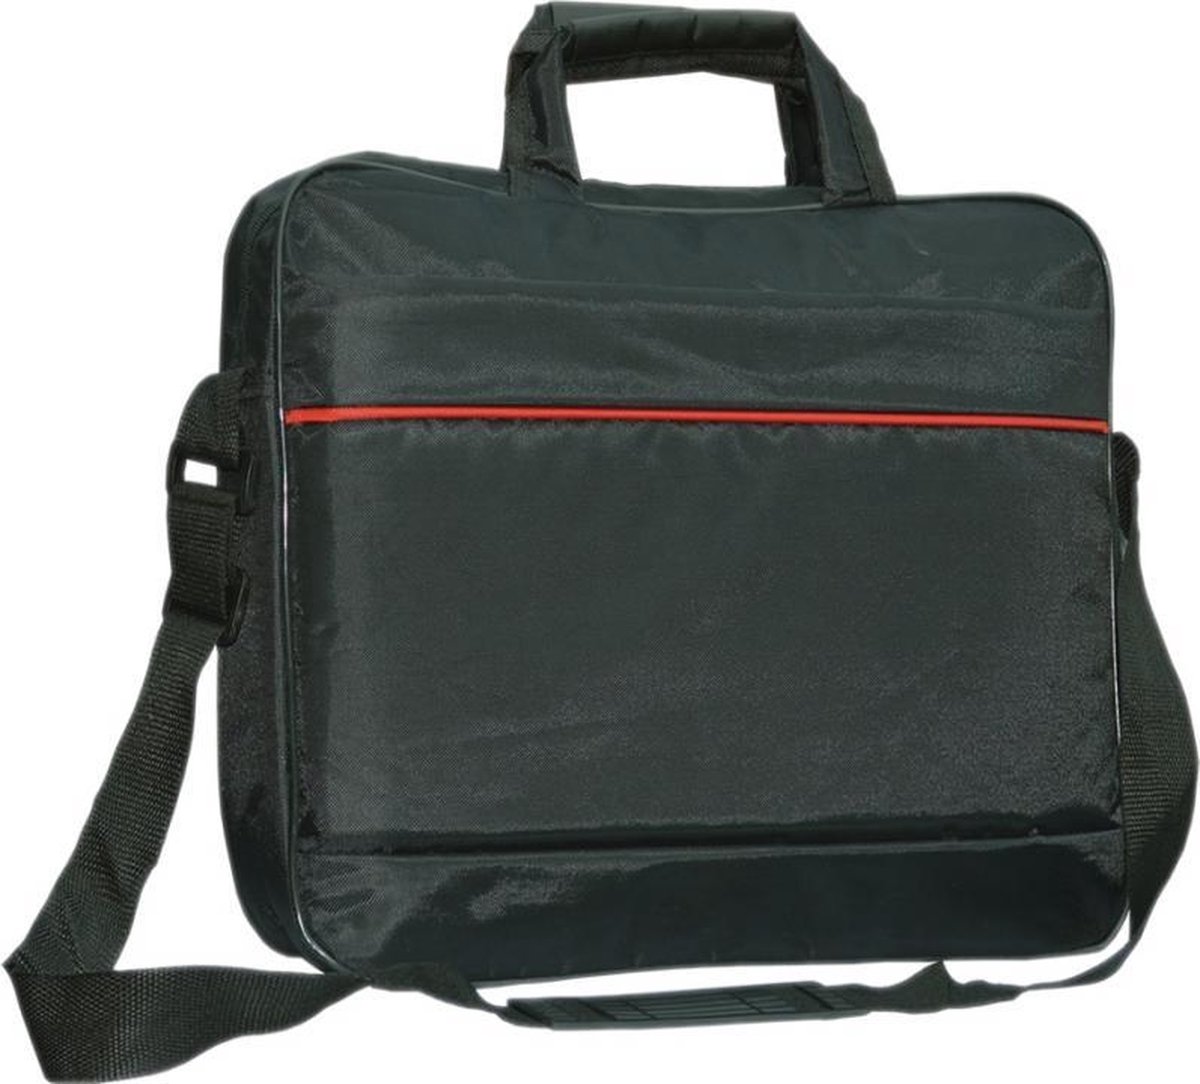 Asus Transformer Book Duet Td300 laptoptas messenger bag / schoudertas / tas , zwart , merk i12Cover